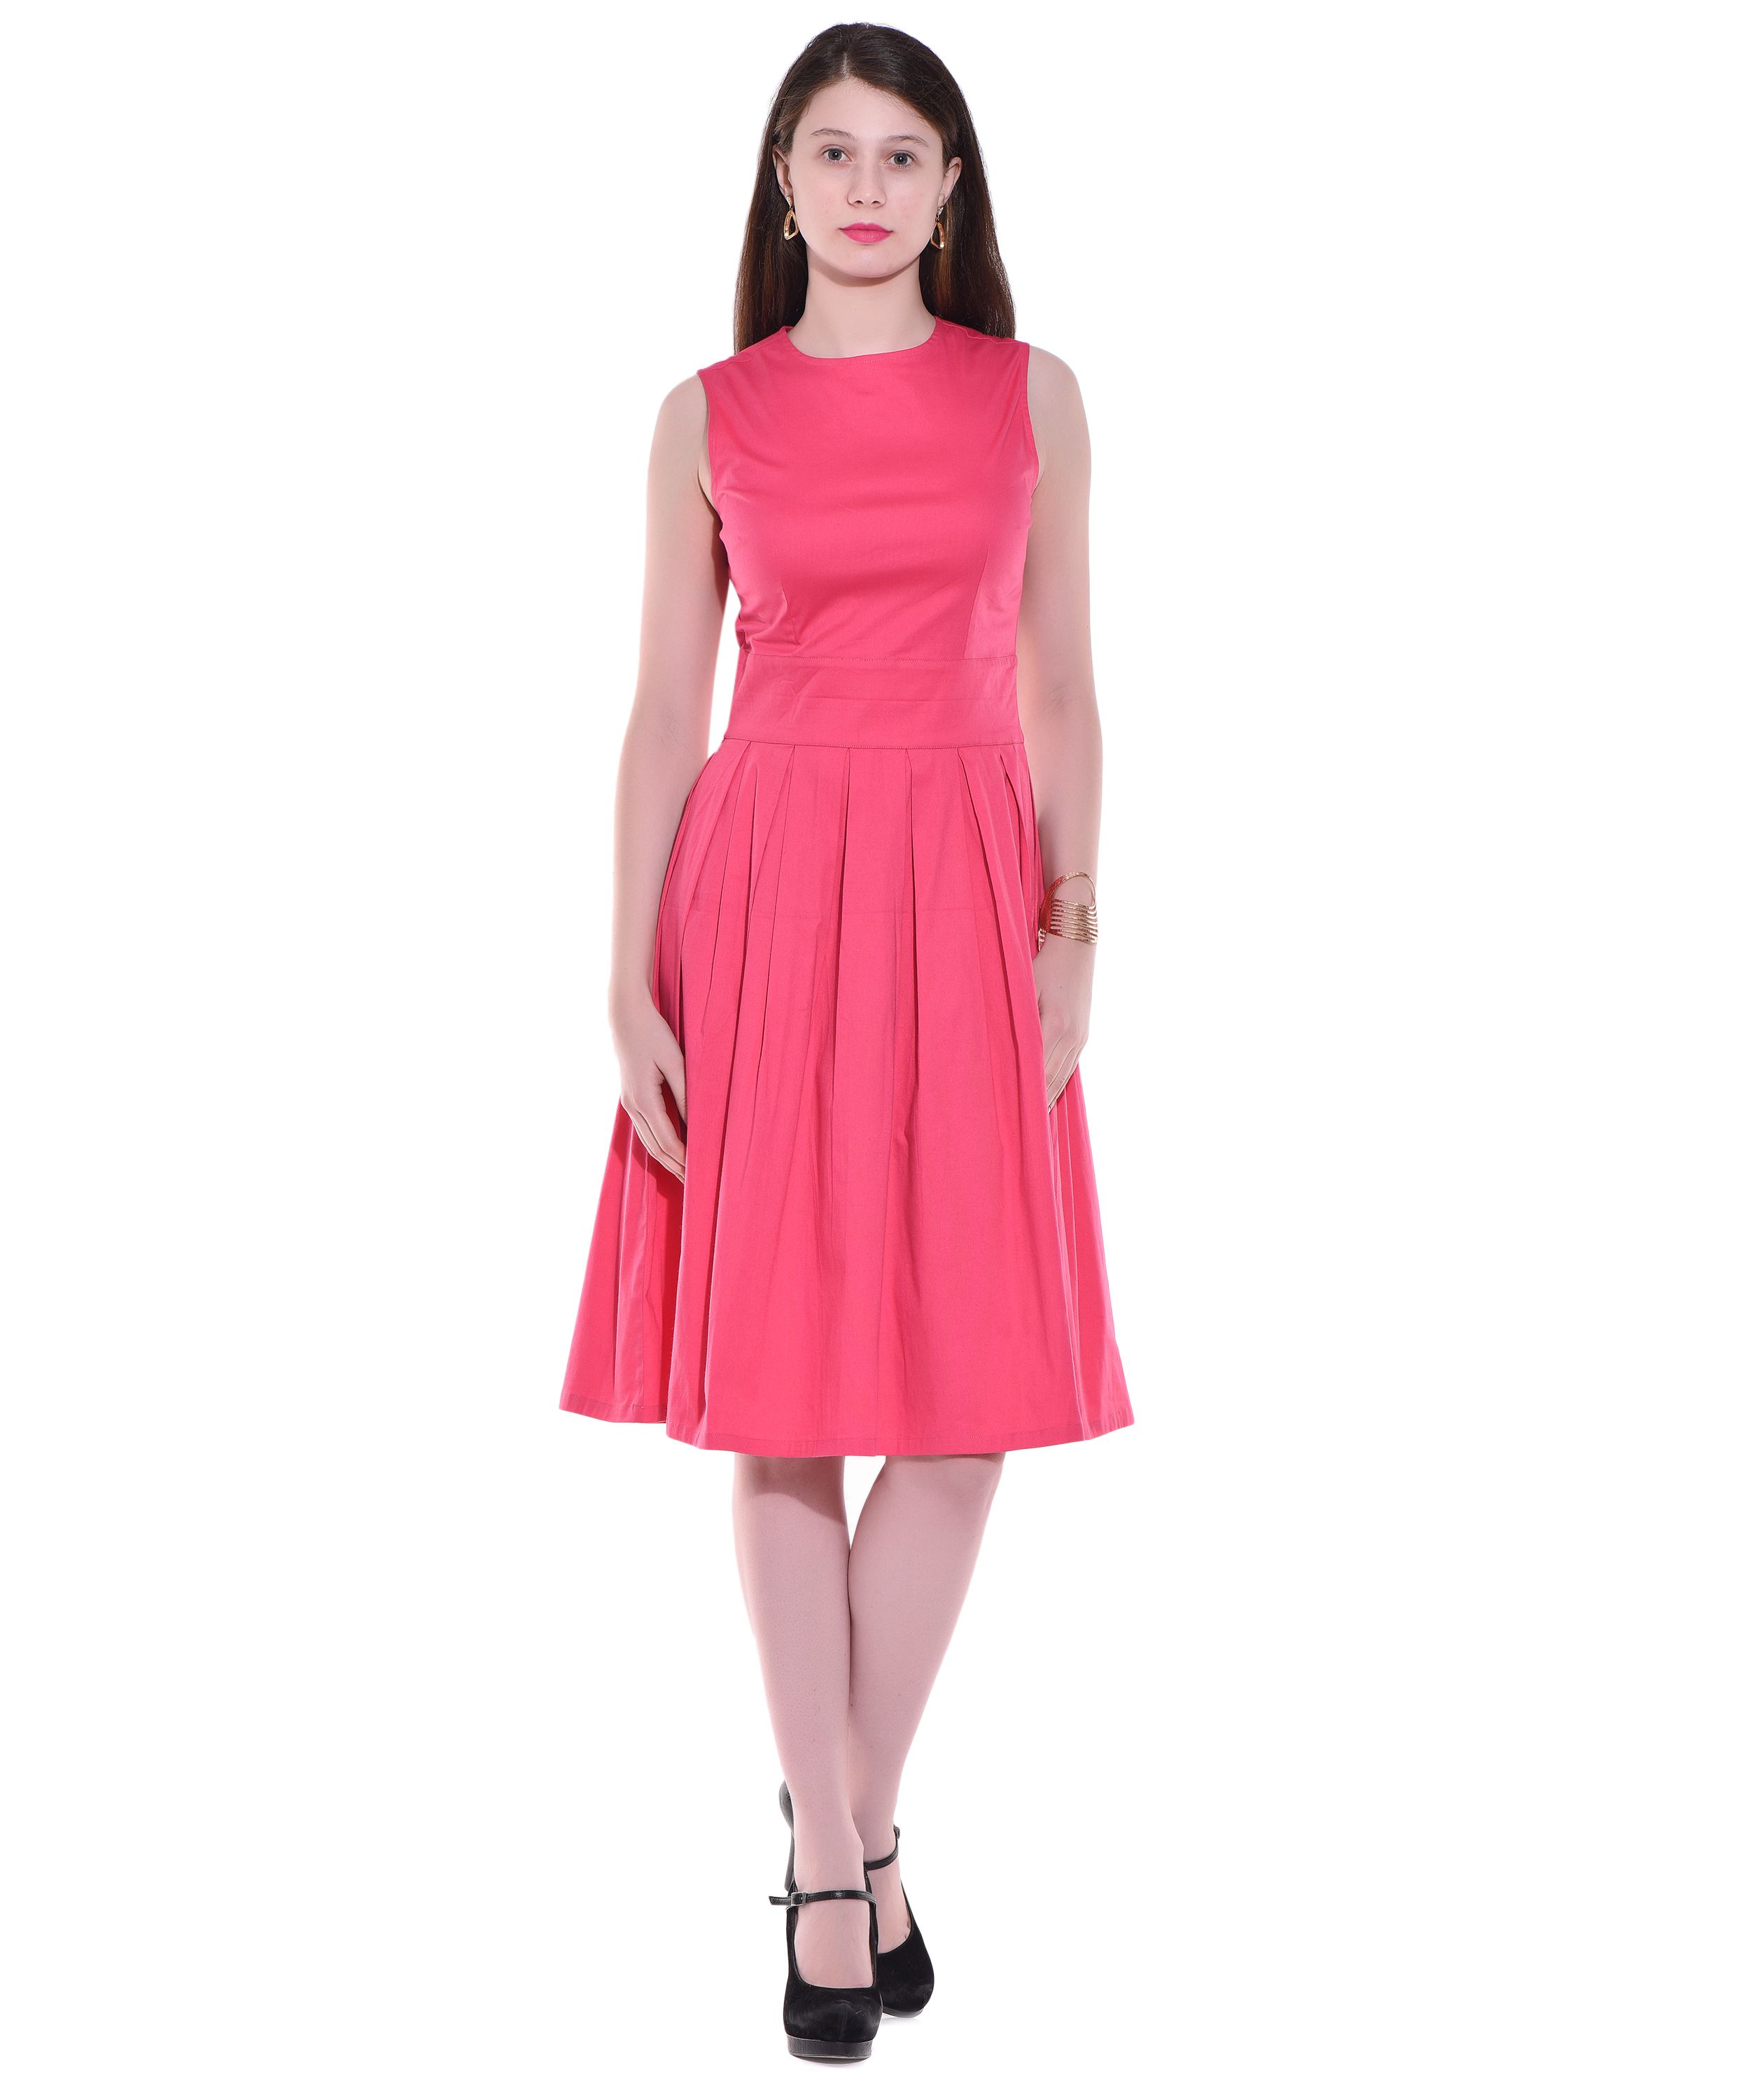 Aara Pink others Dresses - Buy Aara Pink others Dresses Online at Best ...